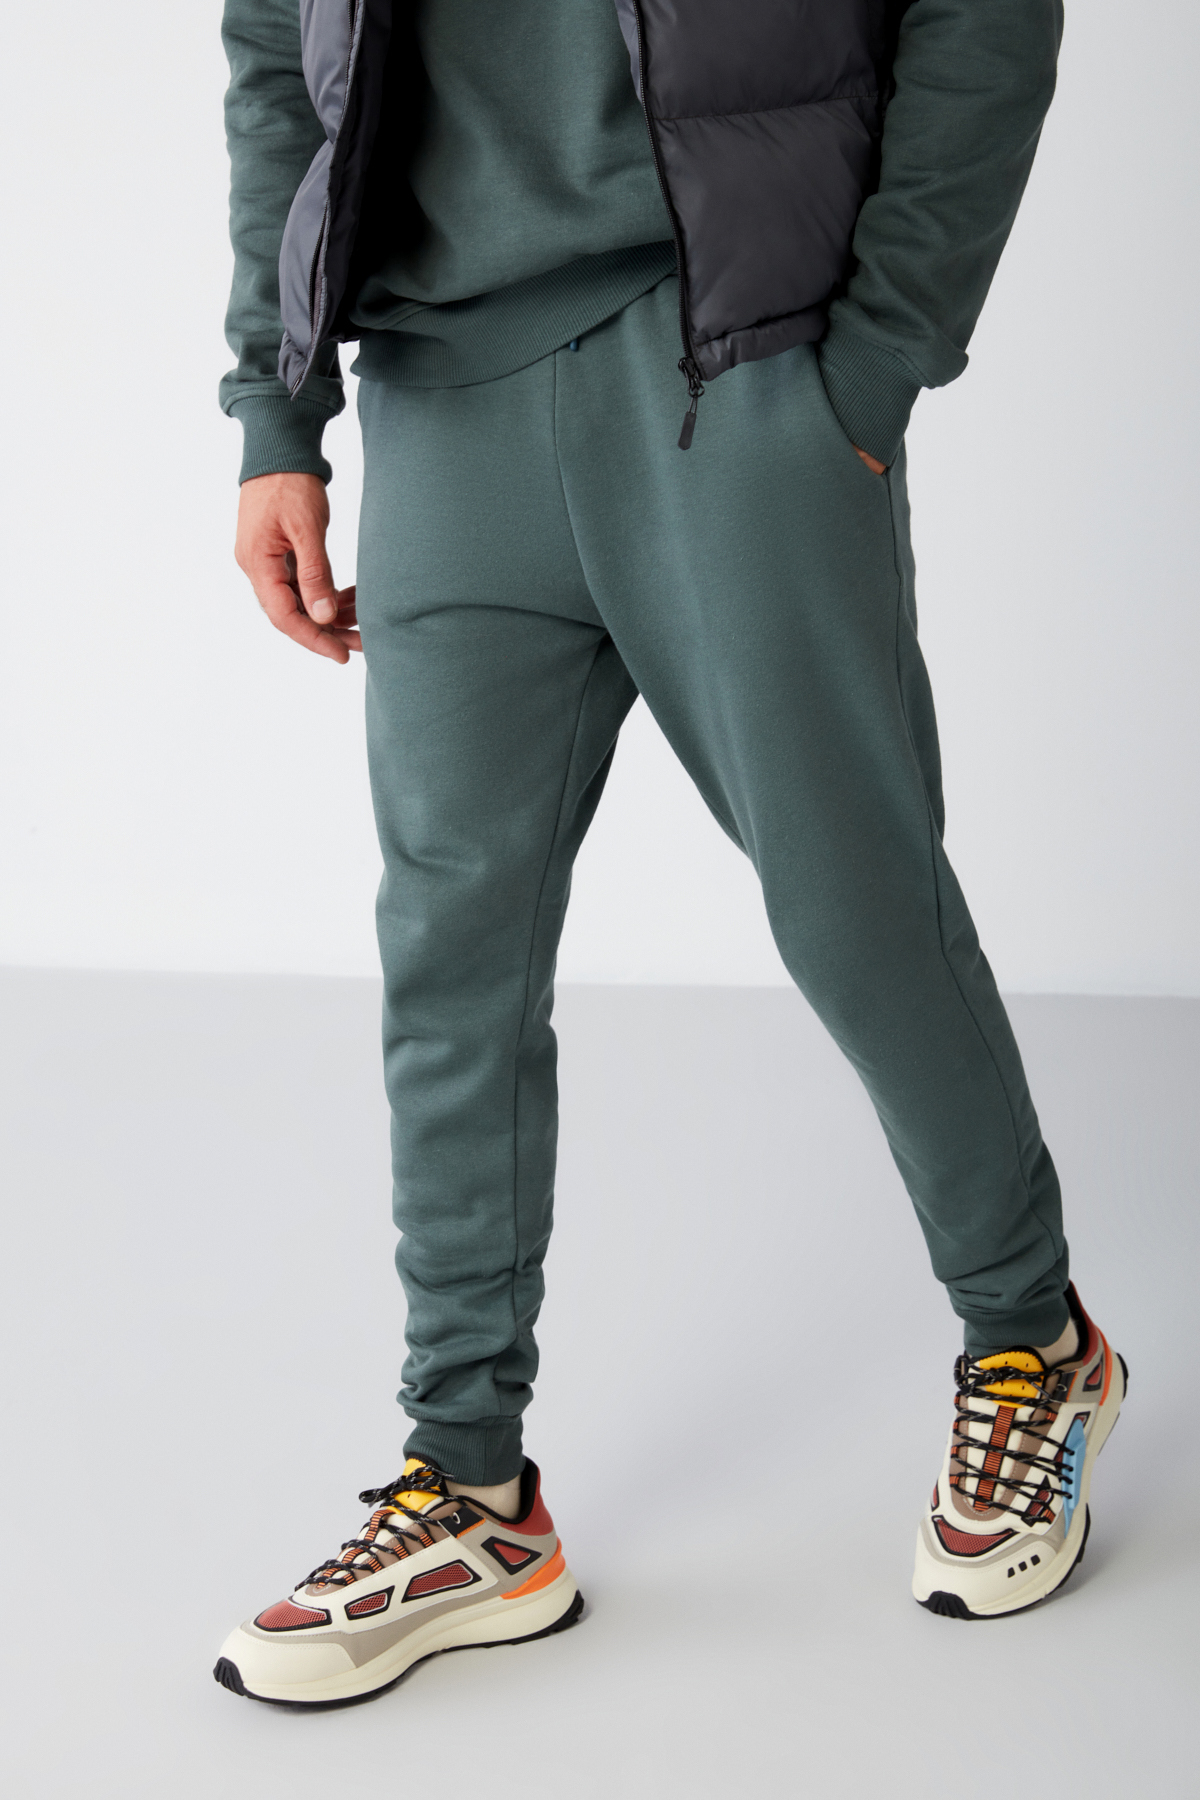 GRIMELANGE Jeremiah Men's Regular Fit Green Sweatpants with Flexible Fabric Waistband and Elastic Pocket